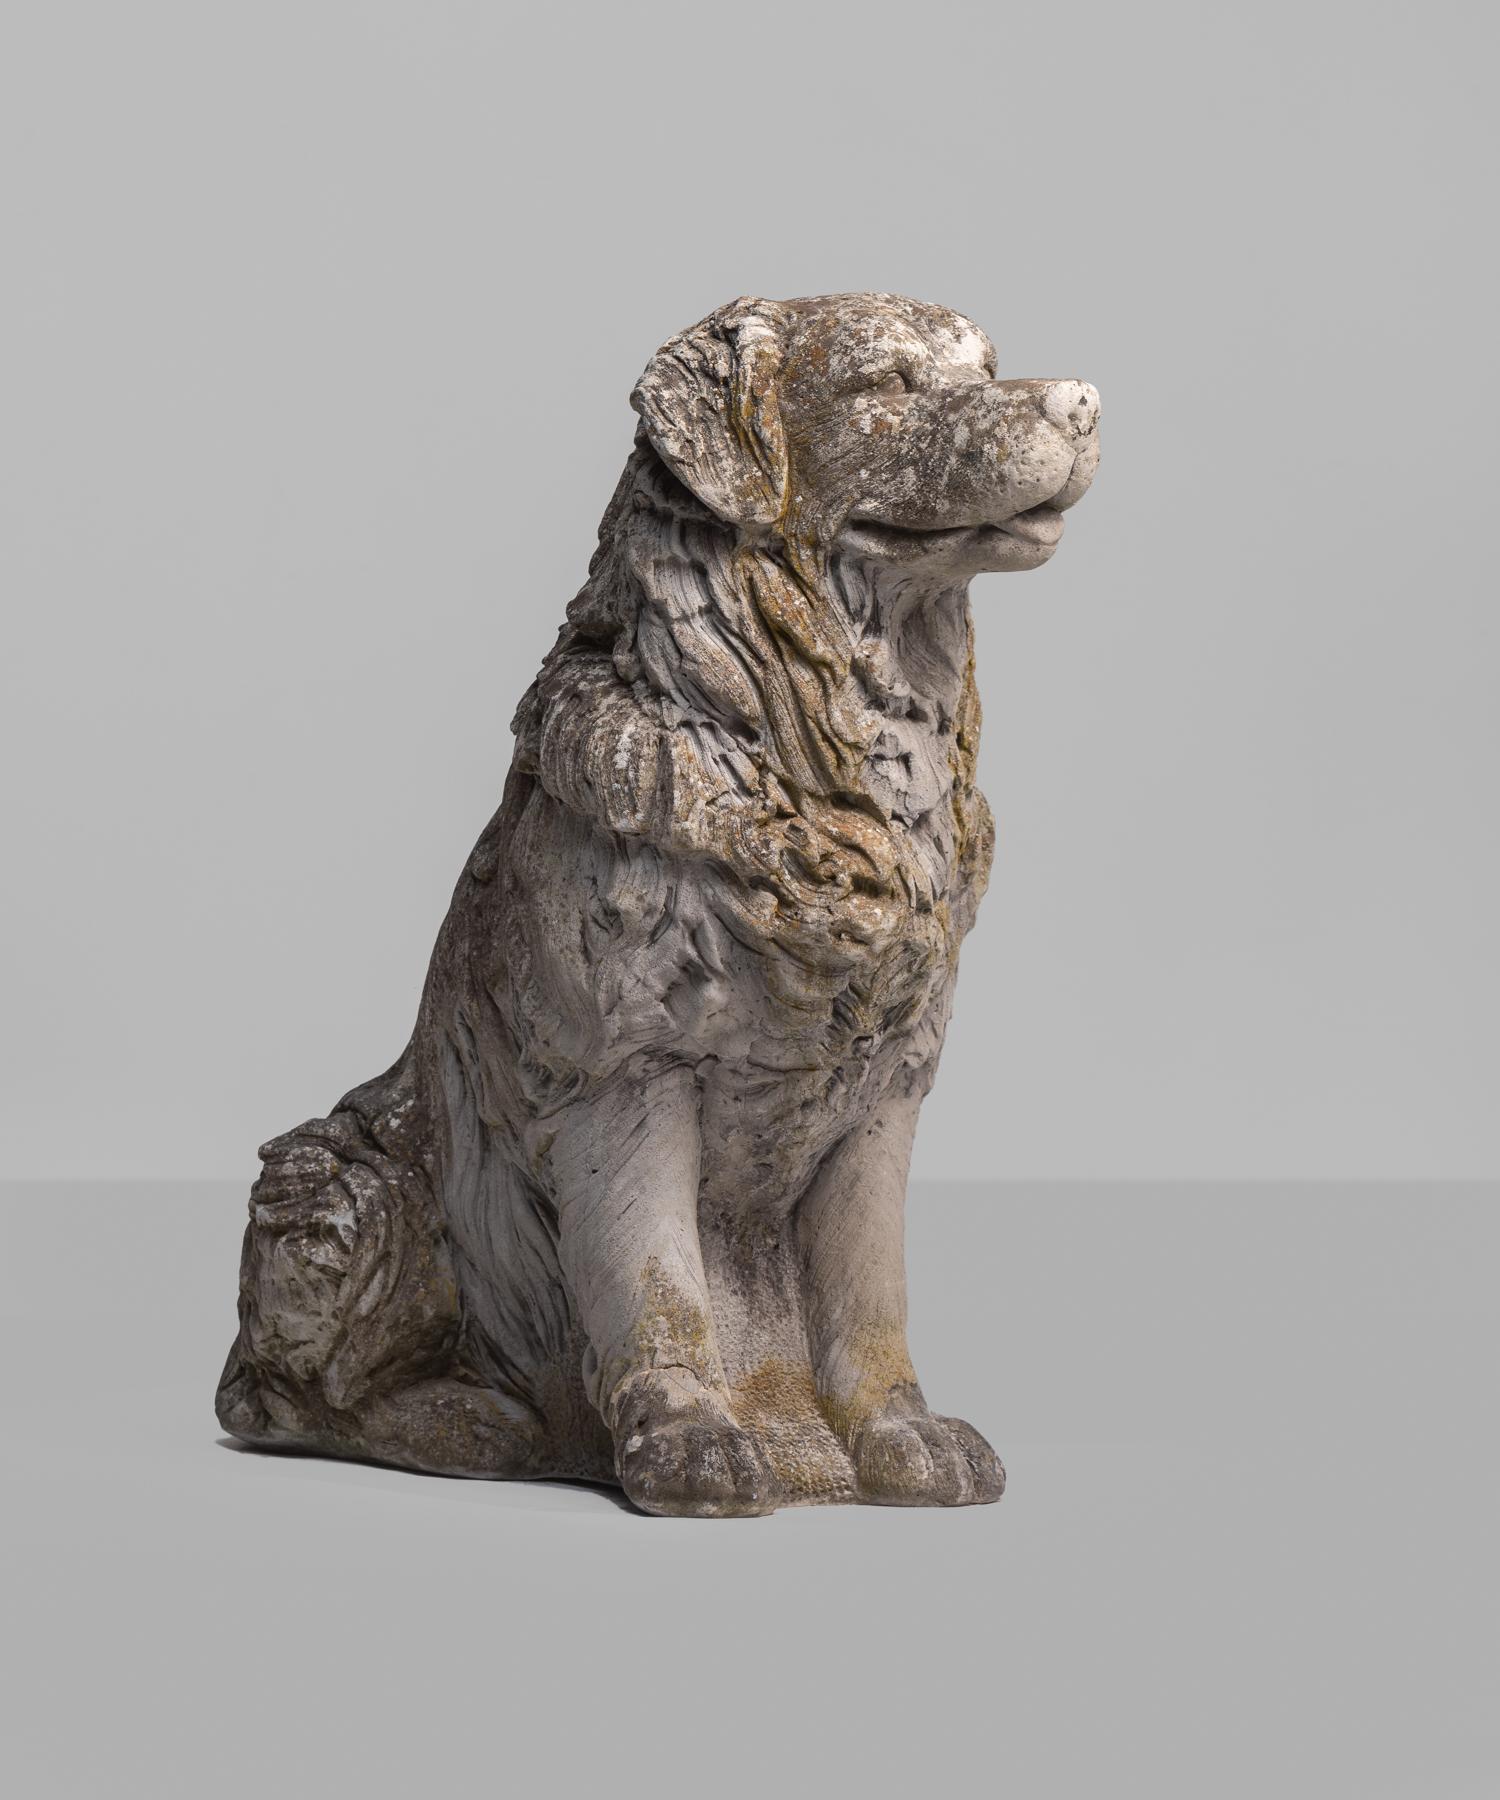 Cast stone dog, France, circa 1950.

A life-size stone representation of man's best friend.